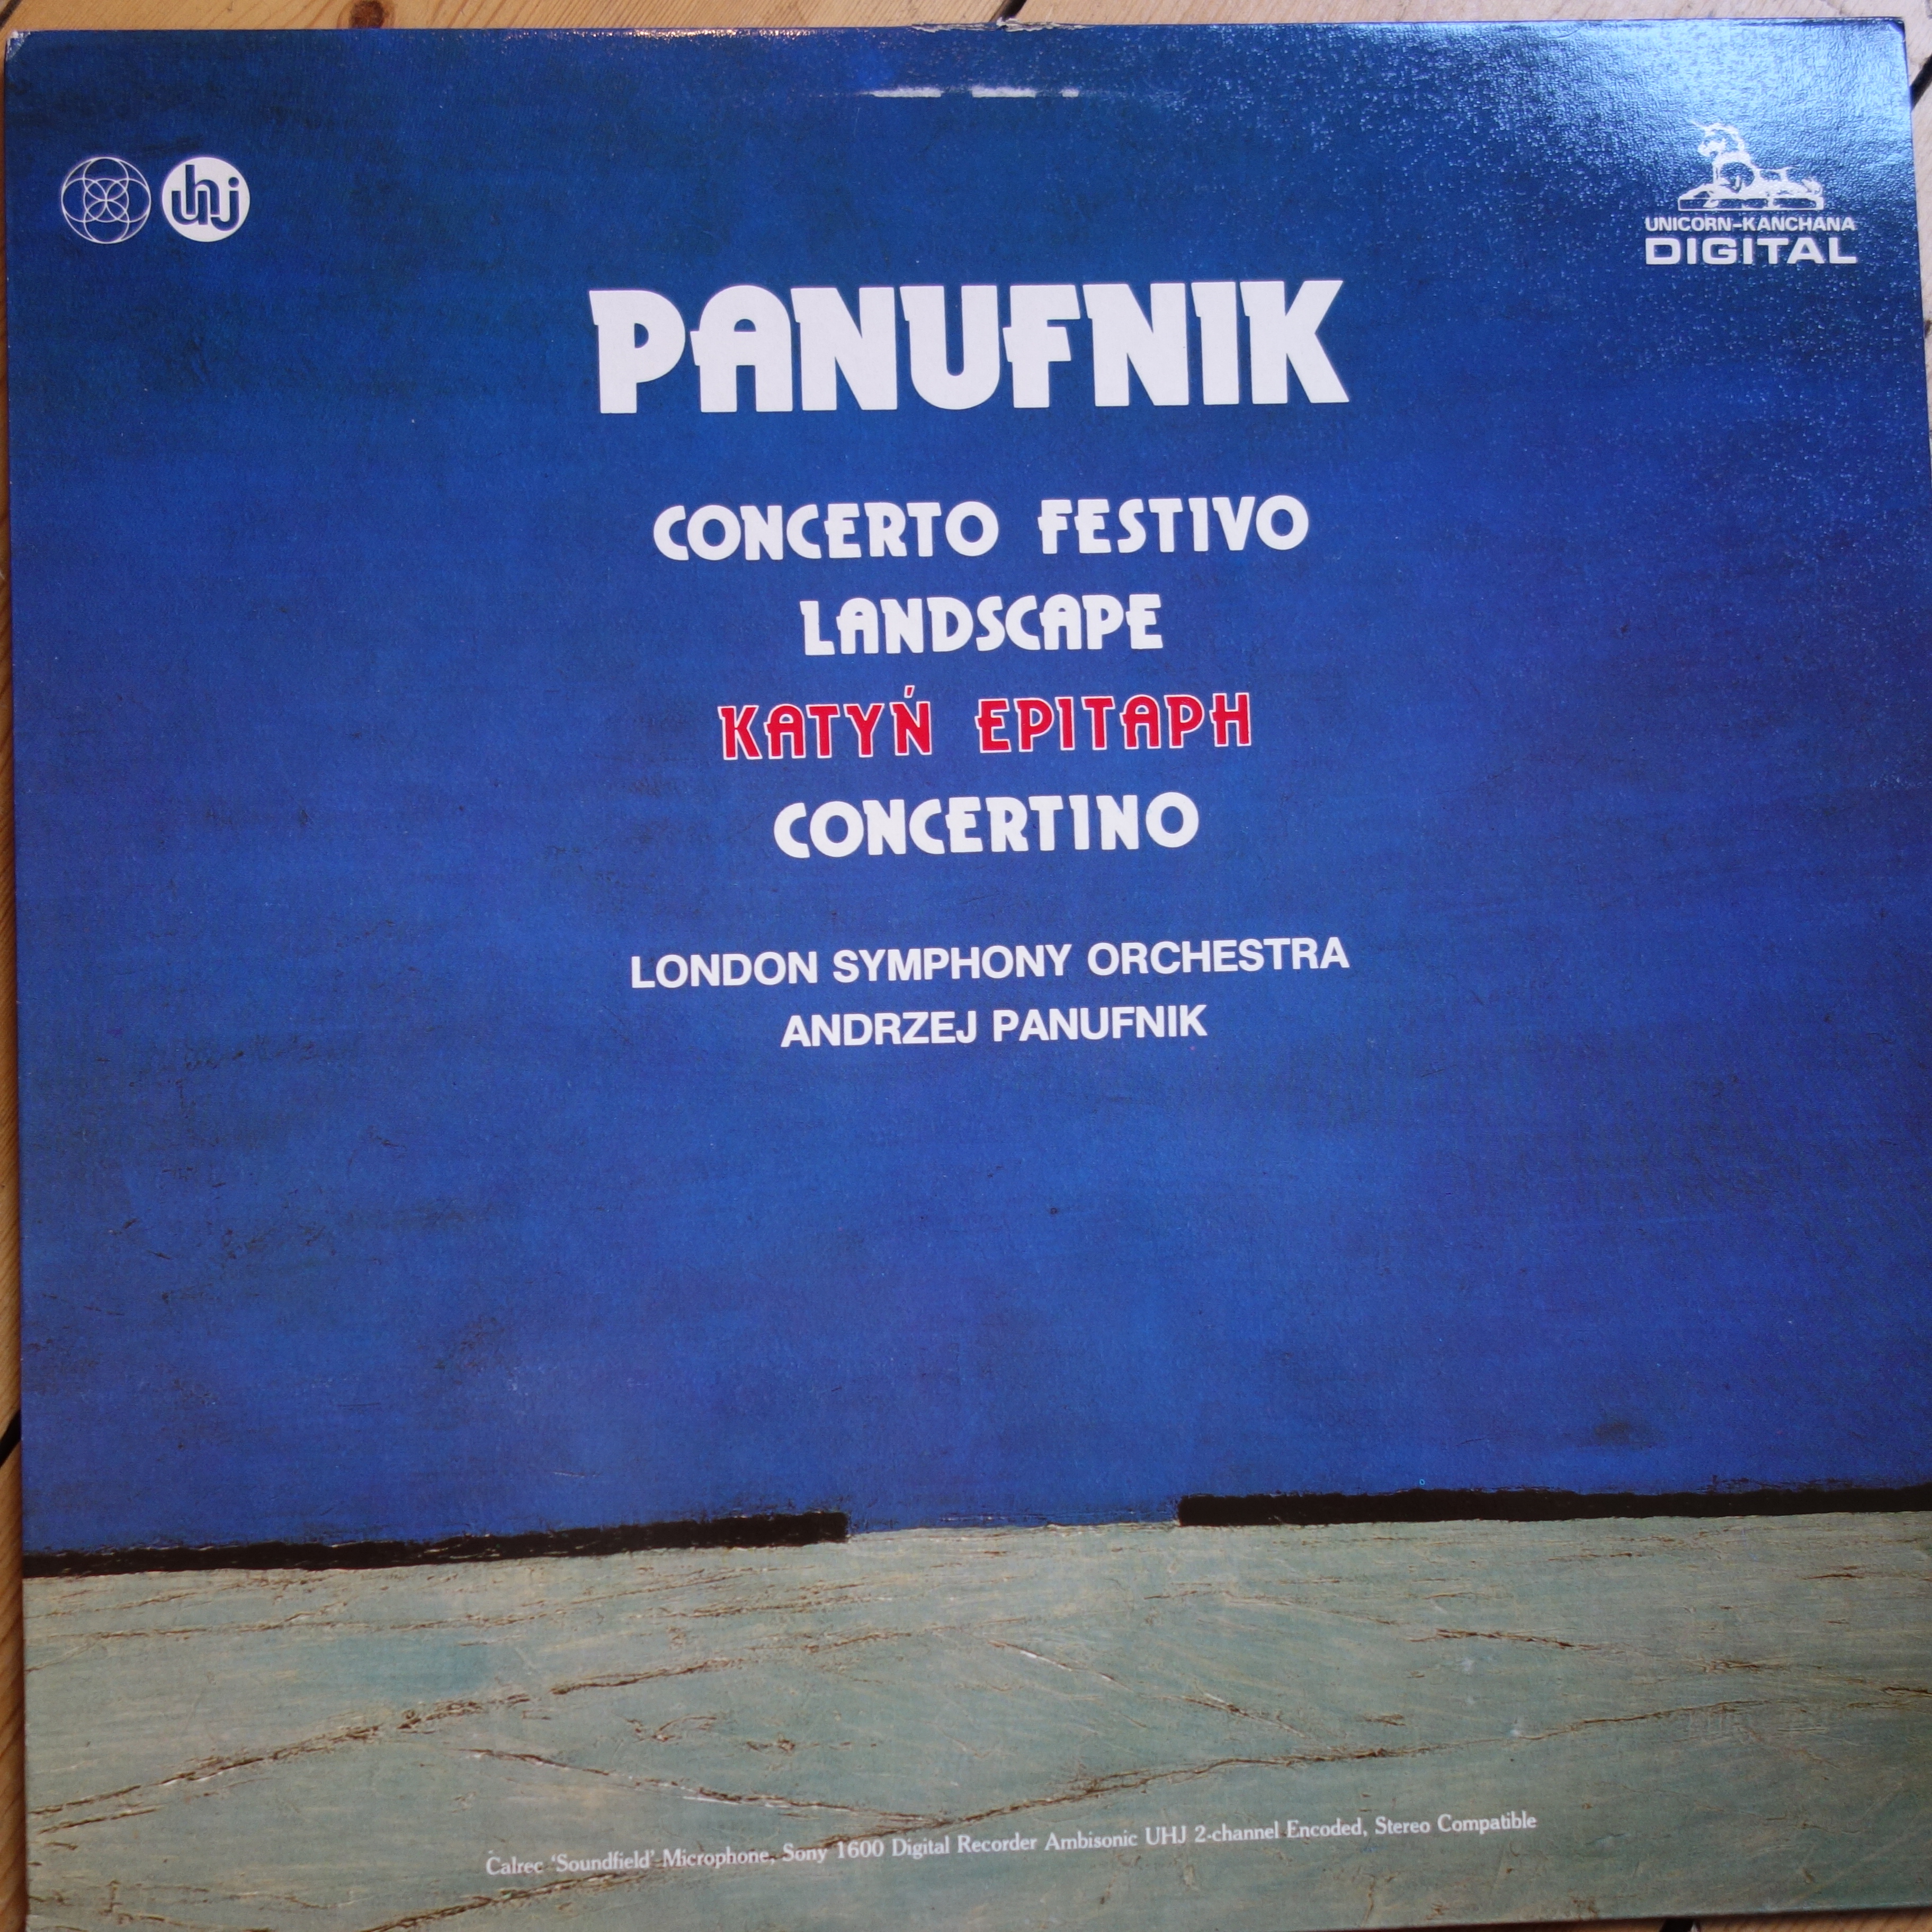 DKP 9016 Panufnik Concerto Festivo, Landscape,